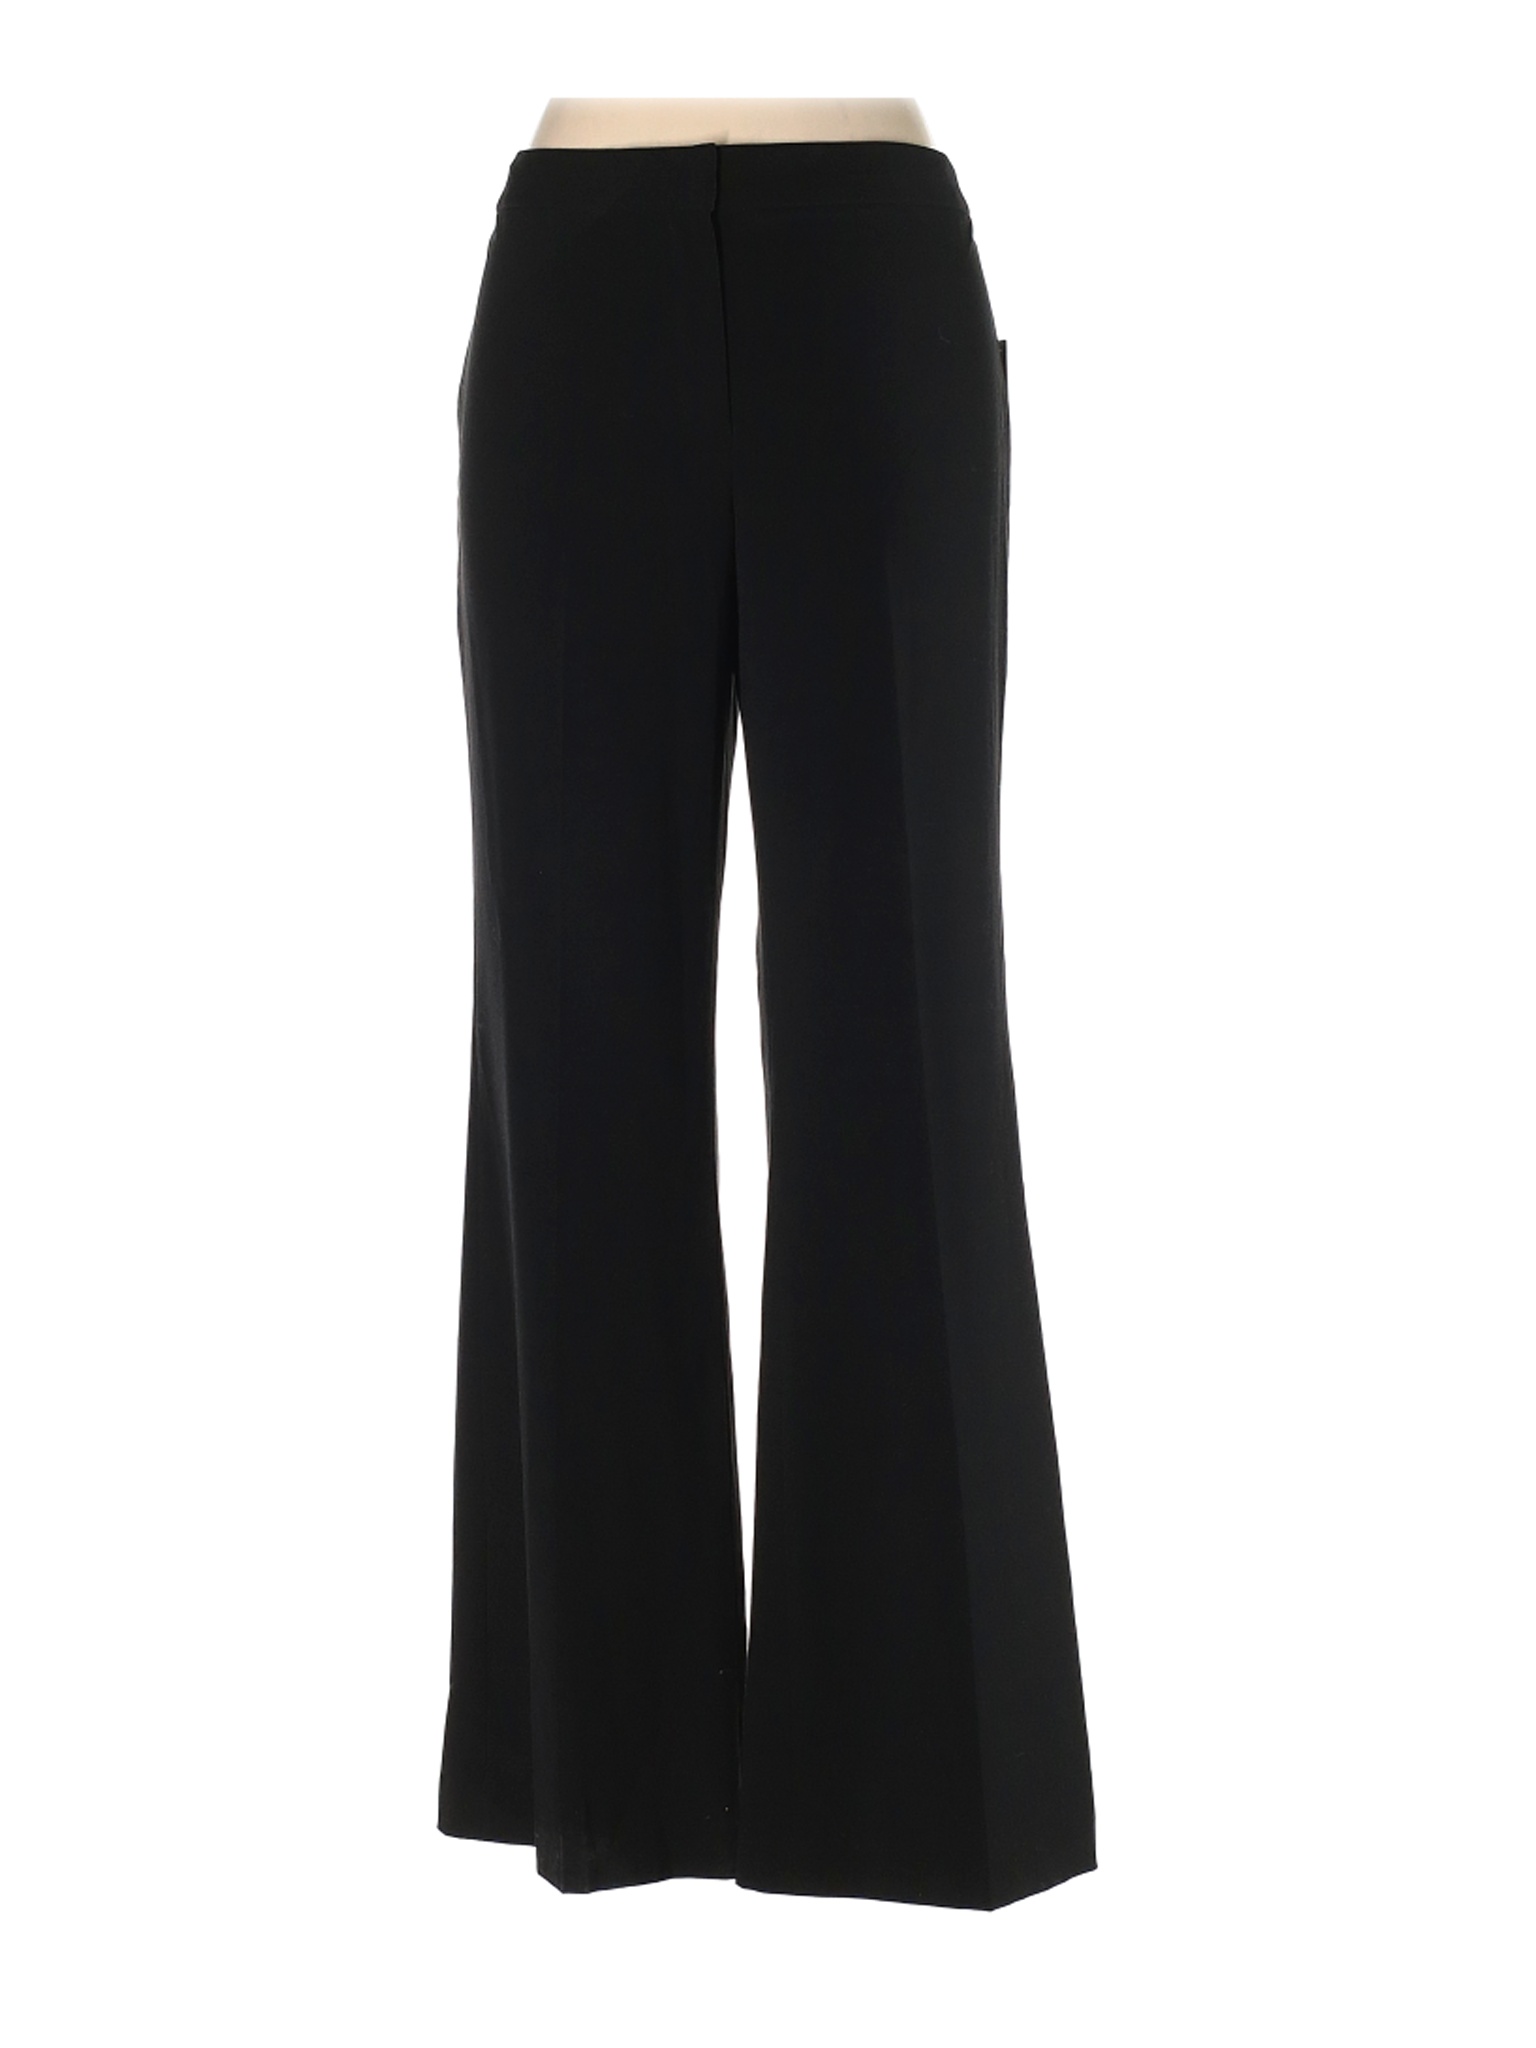 NWT Tahari Women Black Dress Pants 14 | eBay